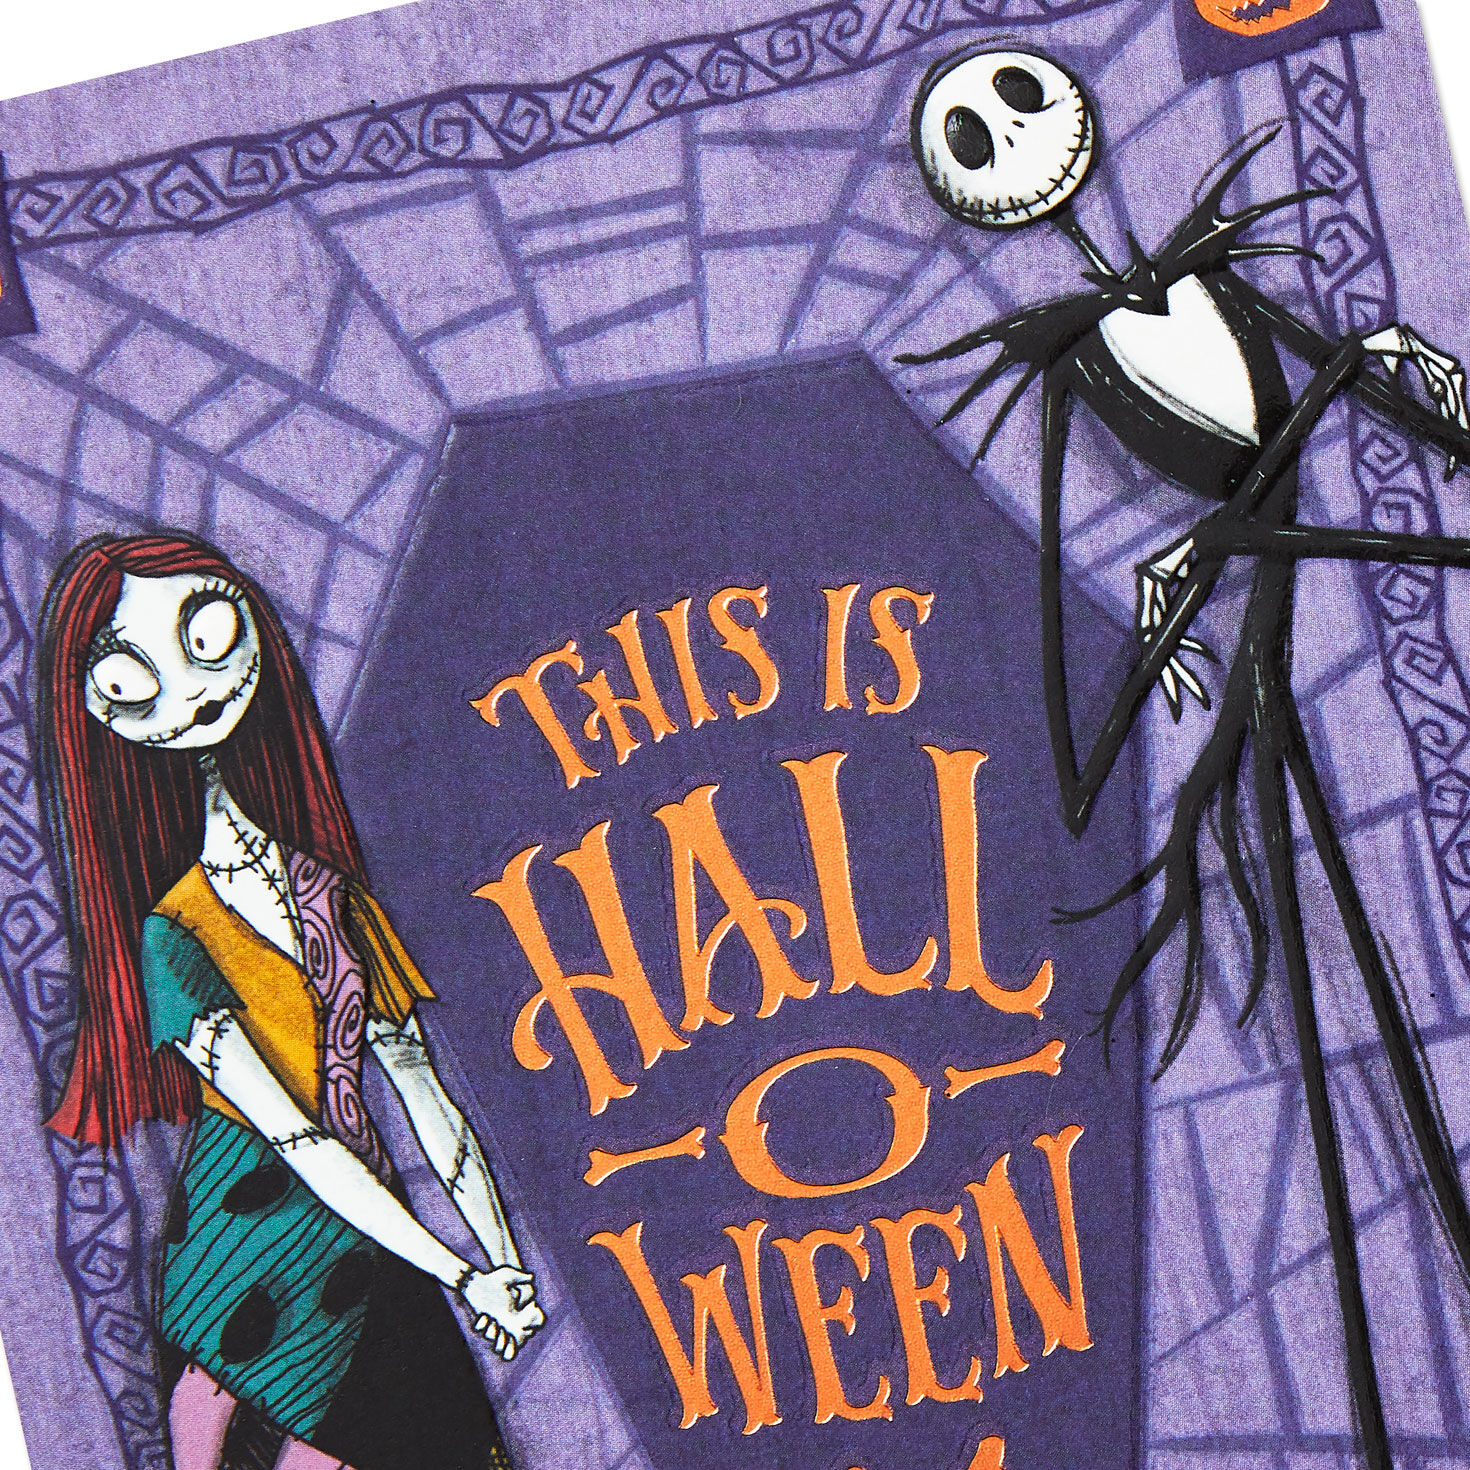 Disney Tim Burton's The Nightmare Before Christmas A Scream Halloween Card for only USD 3.99 | Hallmark